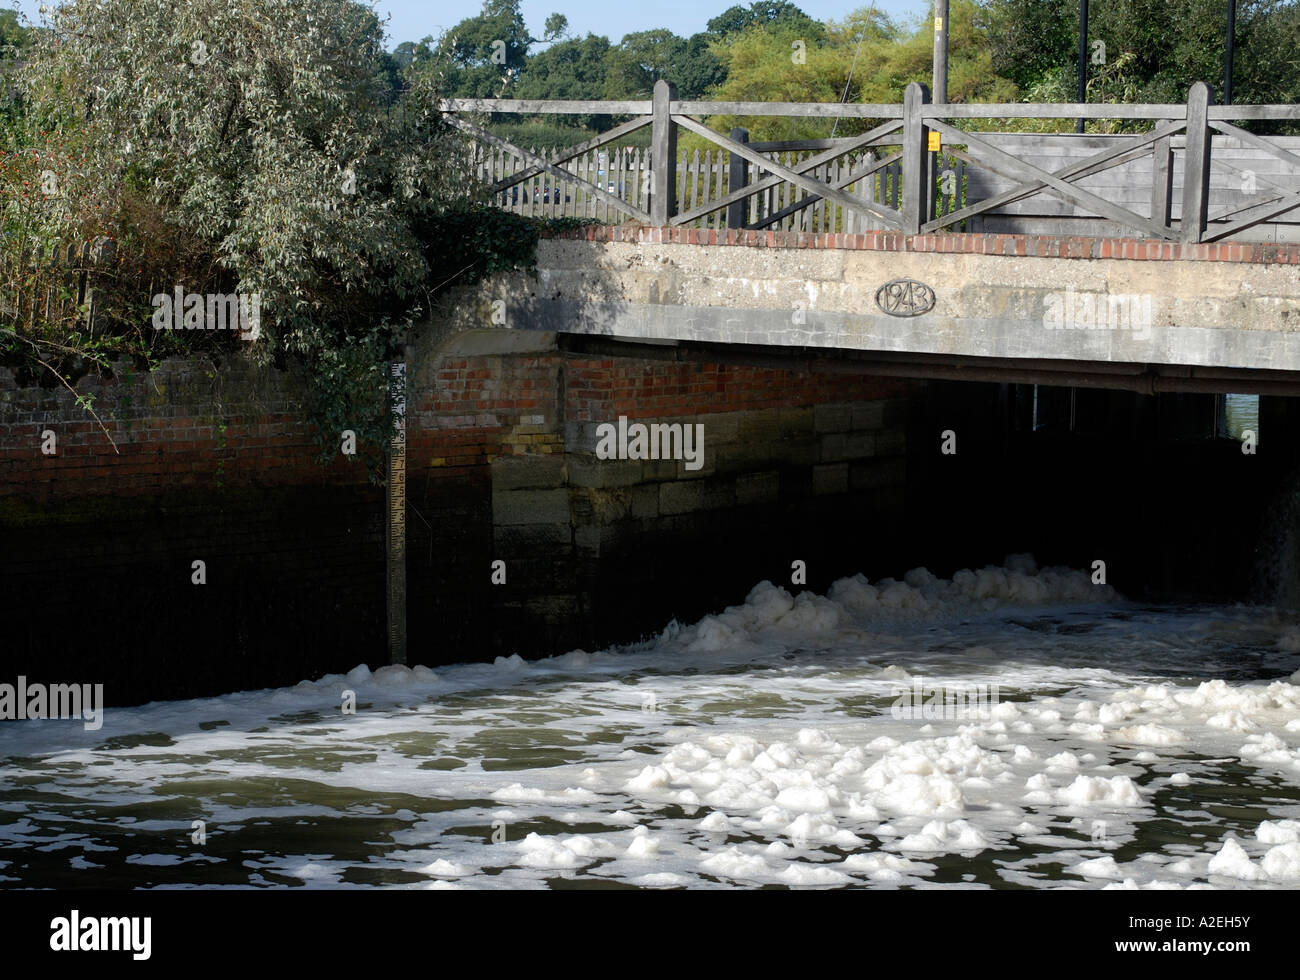 Foam on the Beaulieu River flows under the bridge at Beaulieu Stock Photo